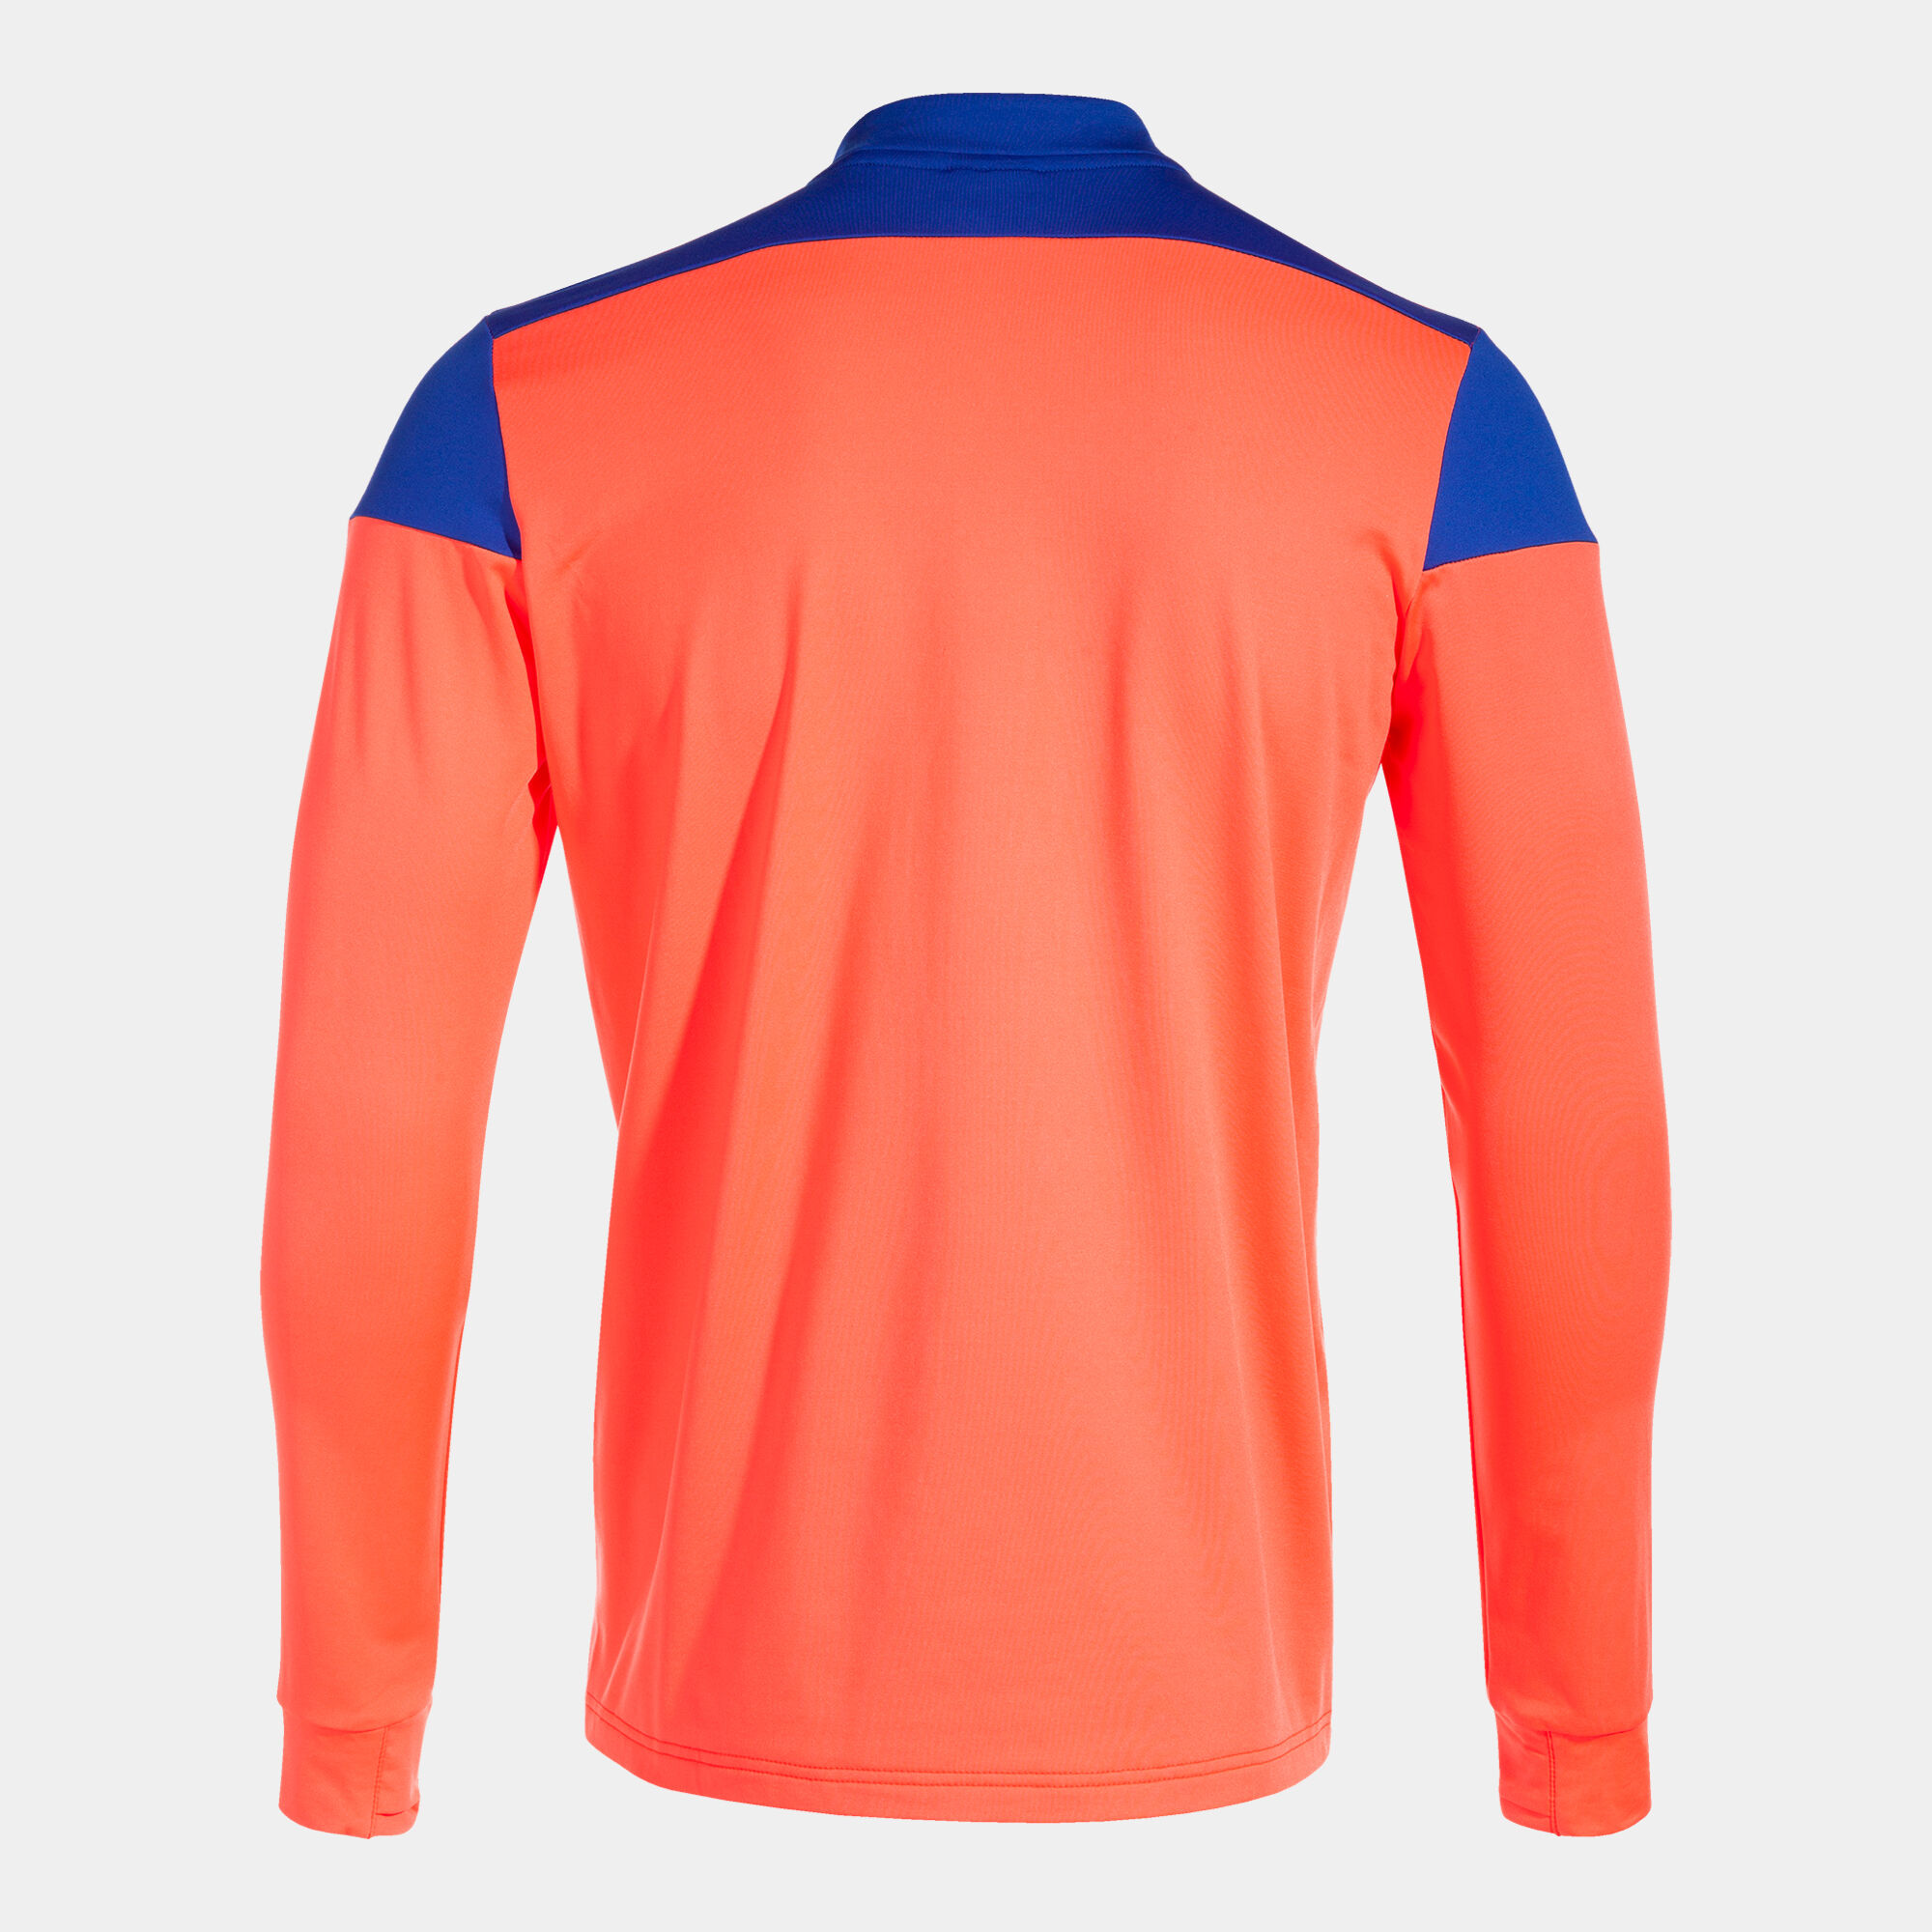 Sweat-shirt homme Elite X corail fluo bleu roi